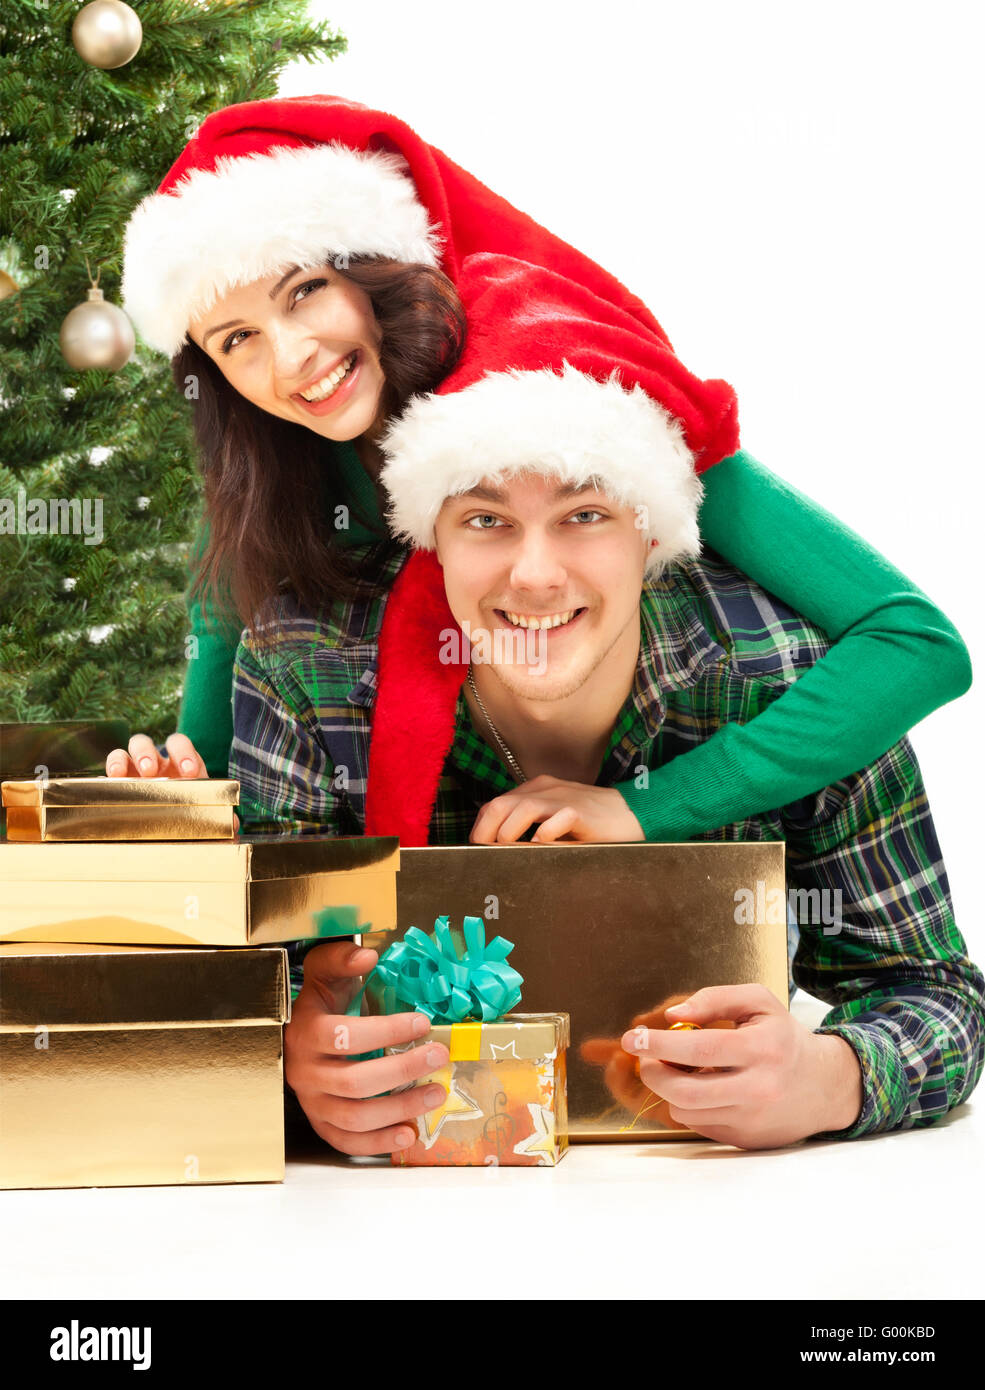 Young happy couple near a Christmas tree. Stock Photo